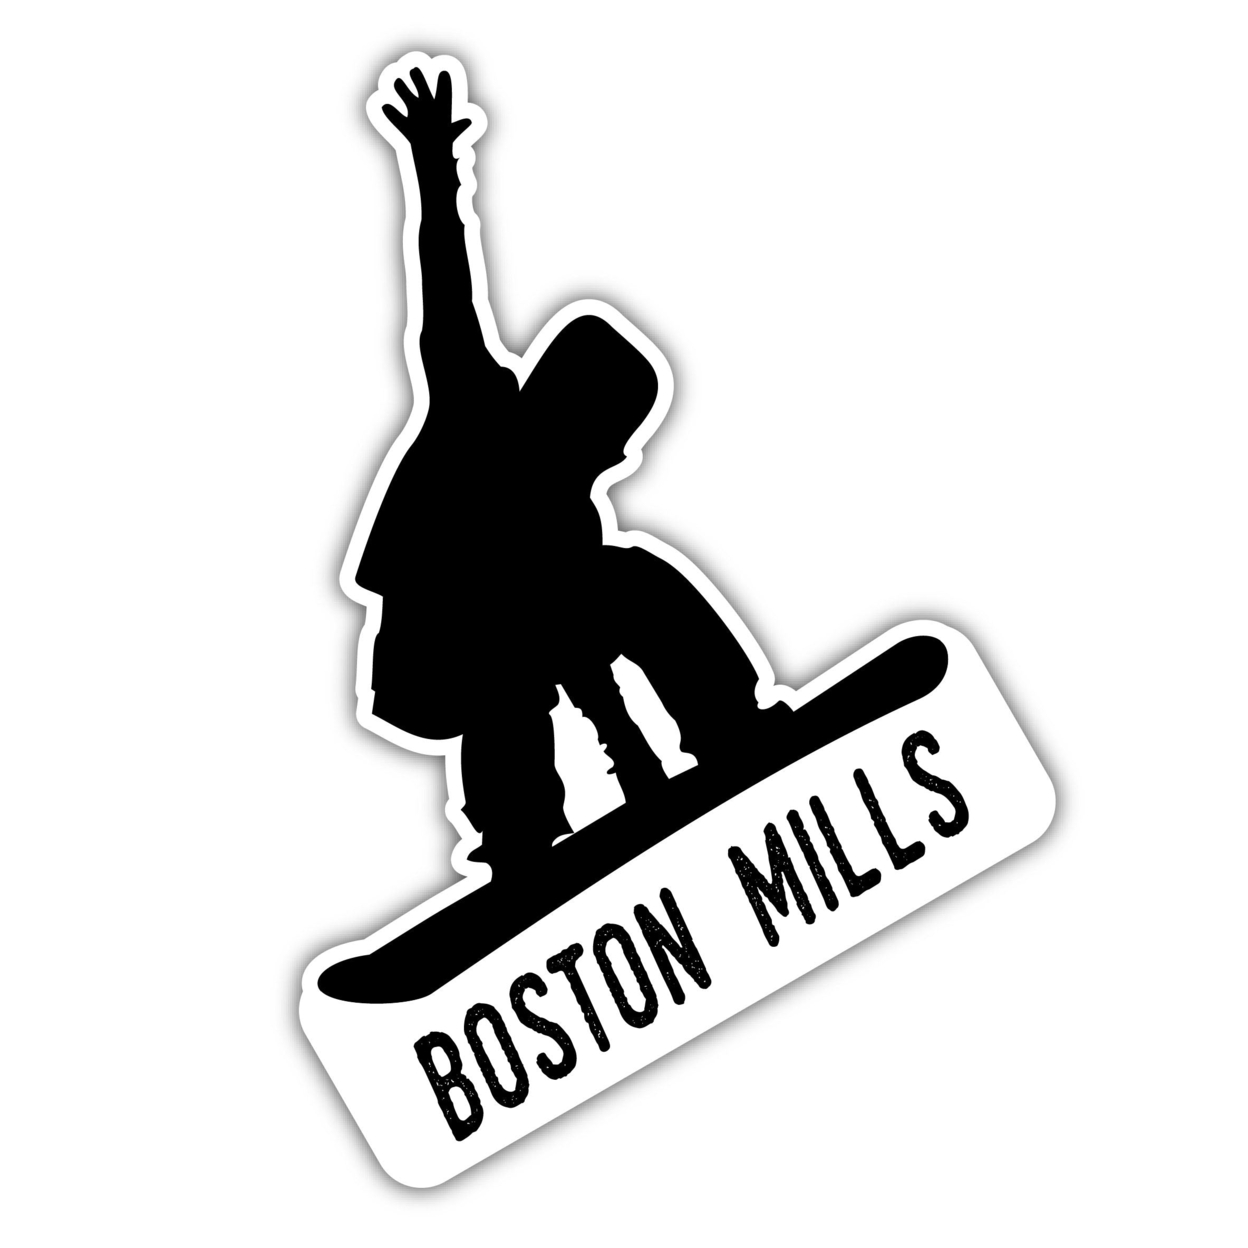 Boston Mills Ohio Ski Adventures Souvenir Approximately 5 X 2.5-Inch Vinyl Decal Sticker Goggle Design